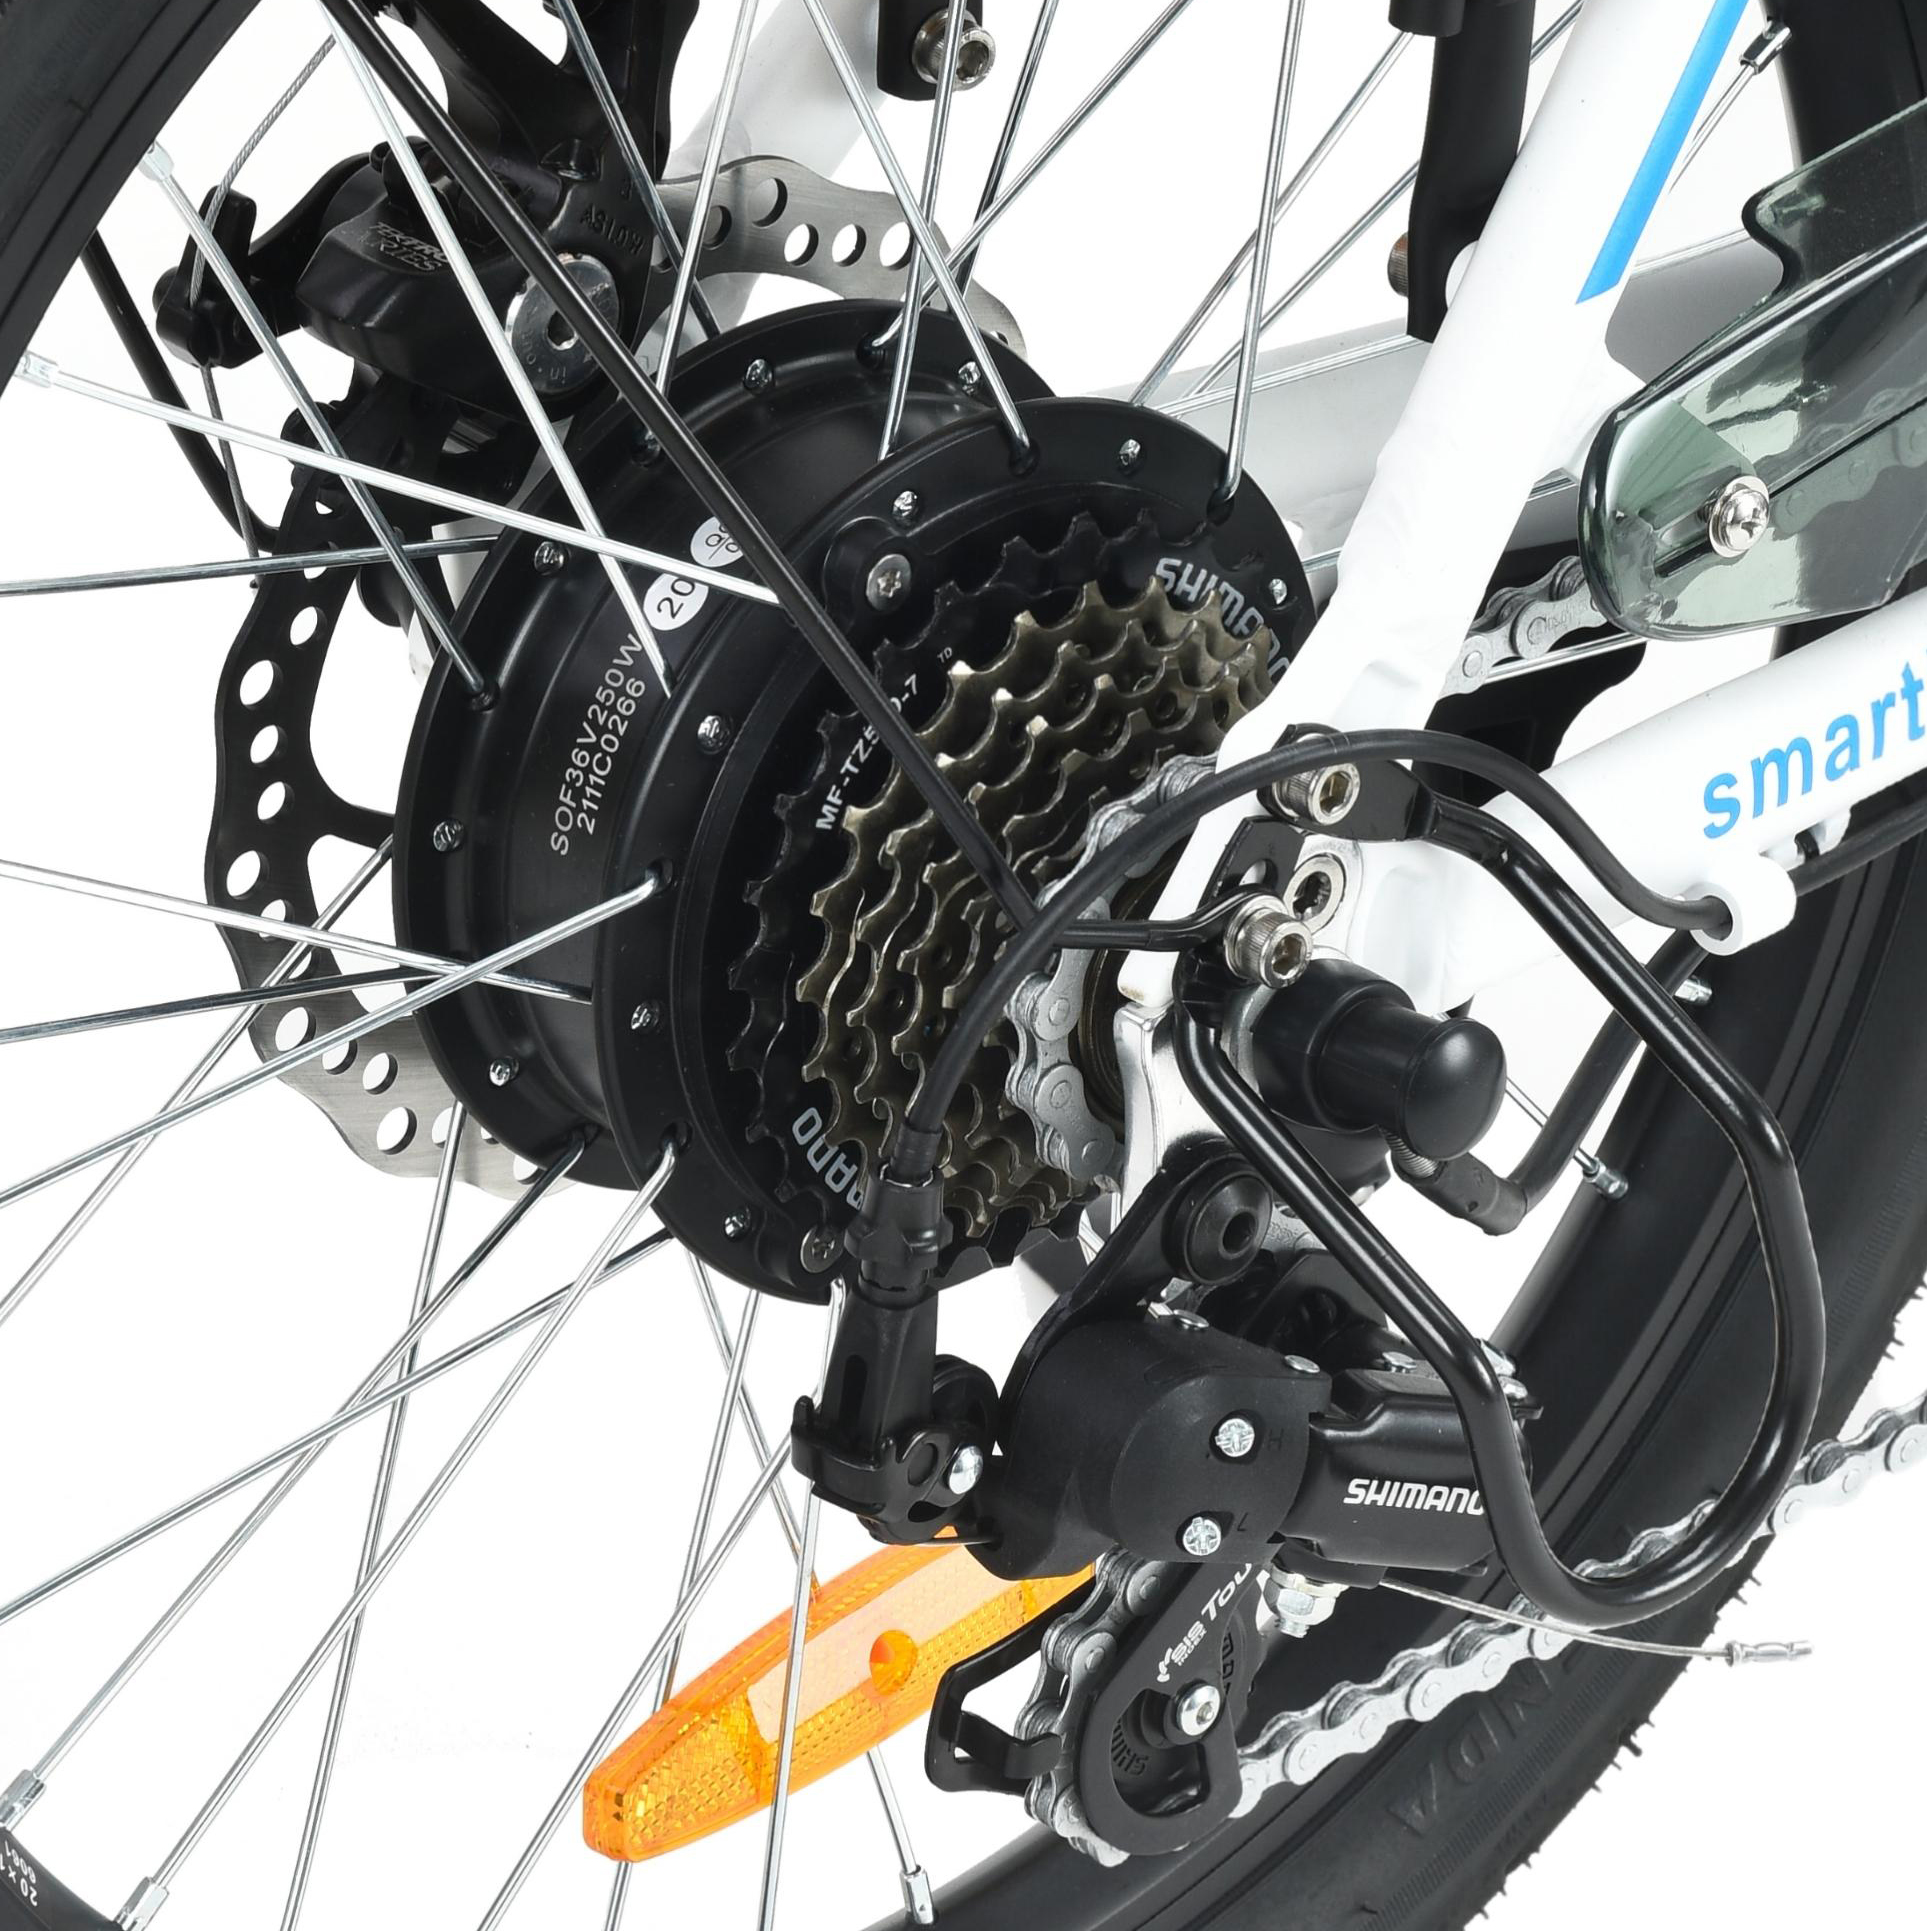 Falt (Laufradgröße: 20 SMARTEC Unisex-Rad, Pedelec/E-Bike Kompakt-/Faltrad weiß) 562 Wh, Zoll, Camp-20D Weiß